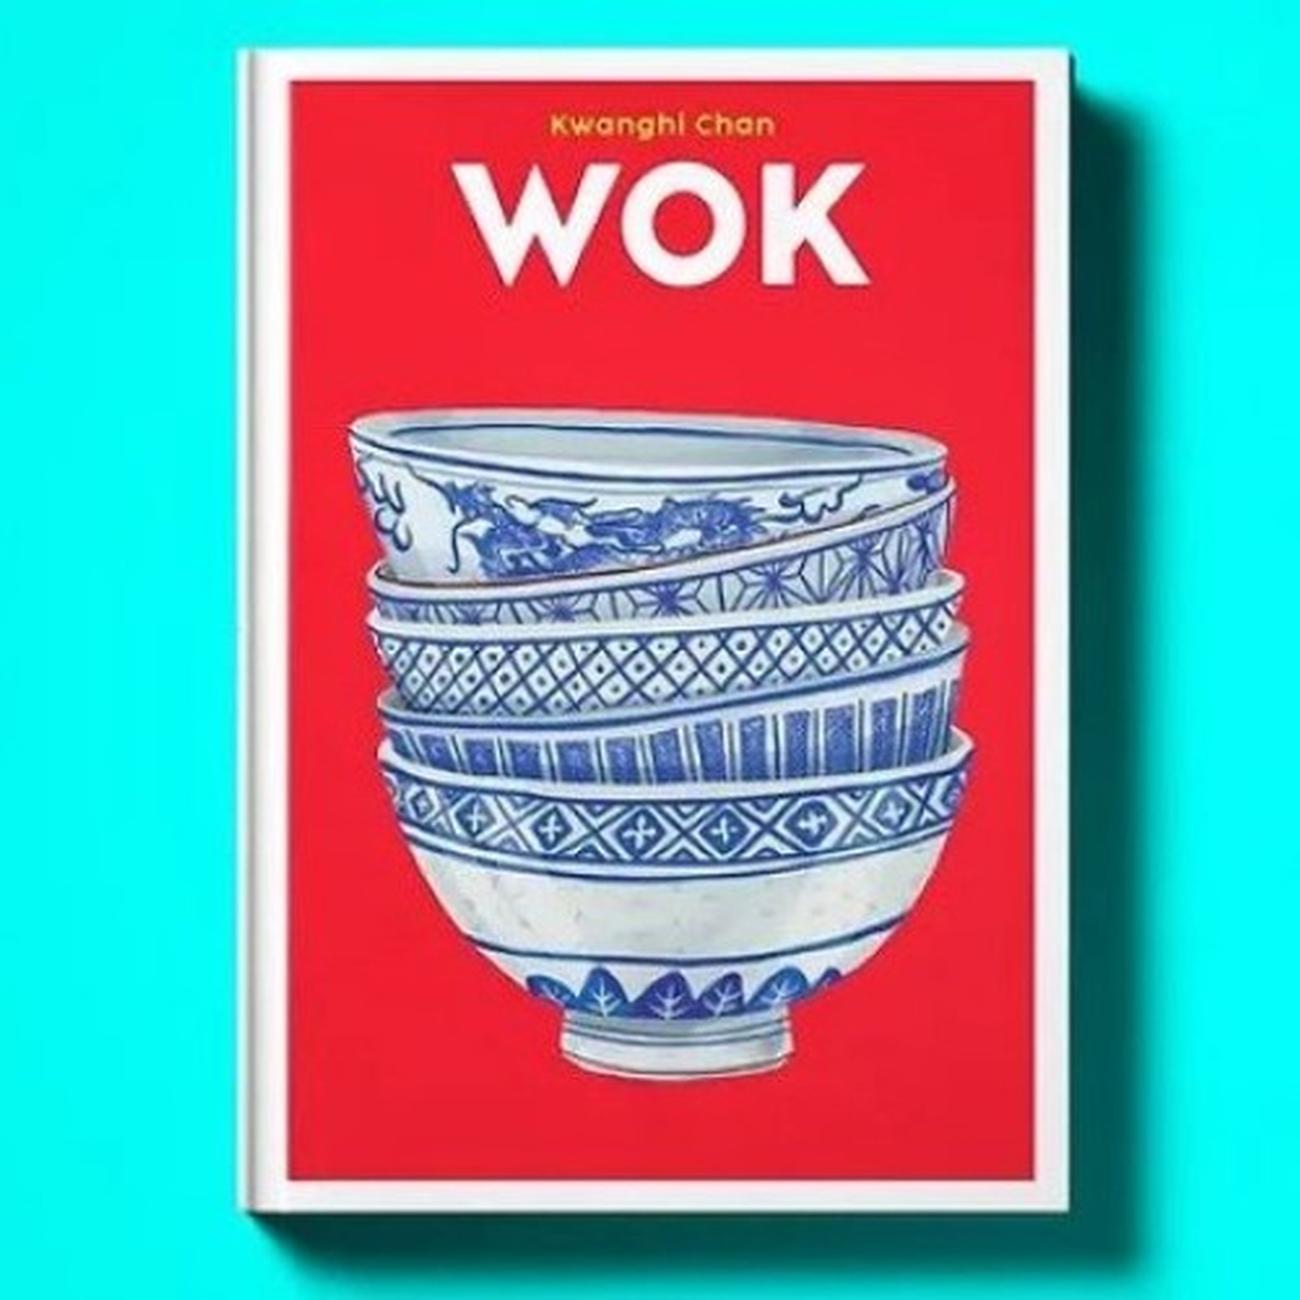 Wok-cookbook-by-kwanghi-chan - WOK by Kwanghi Chan